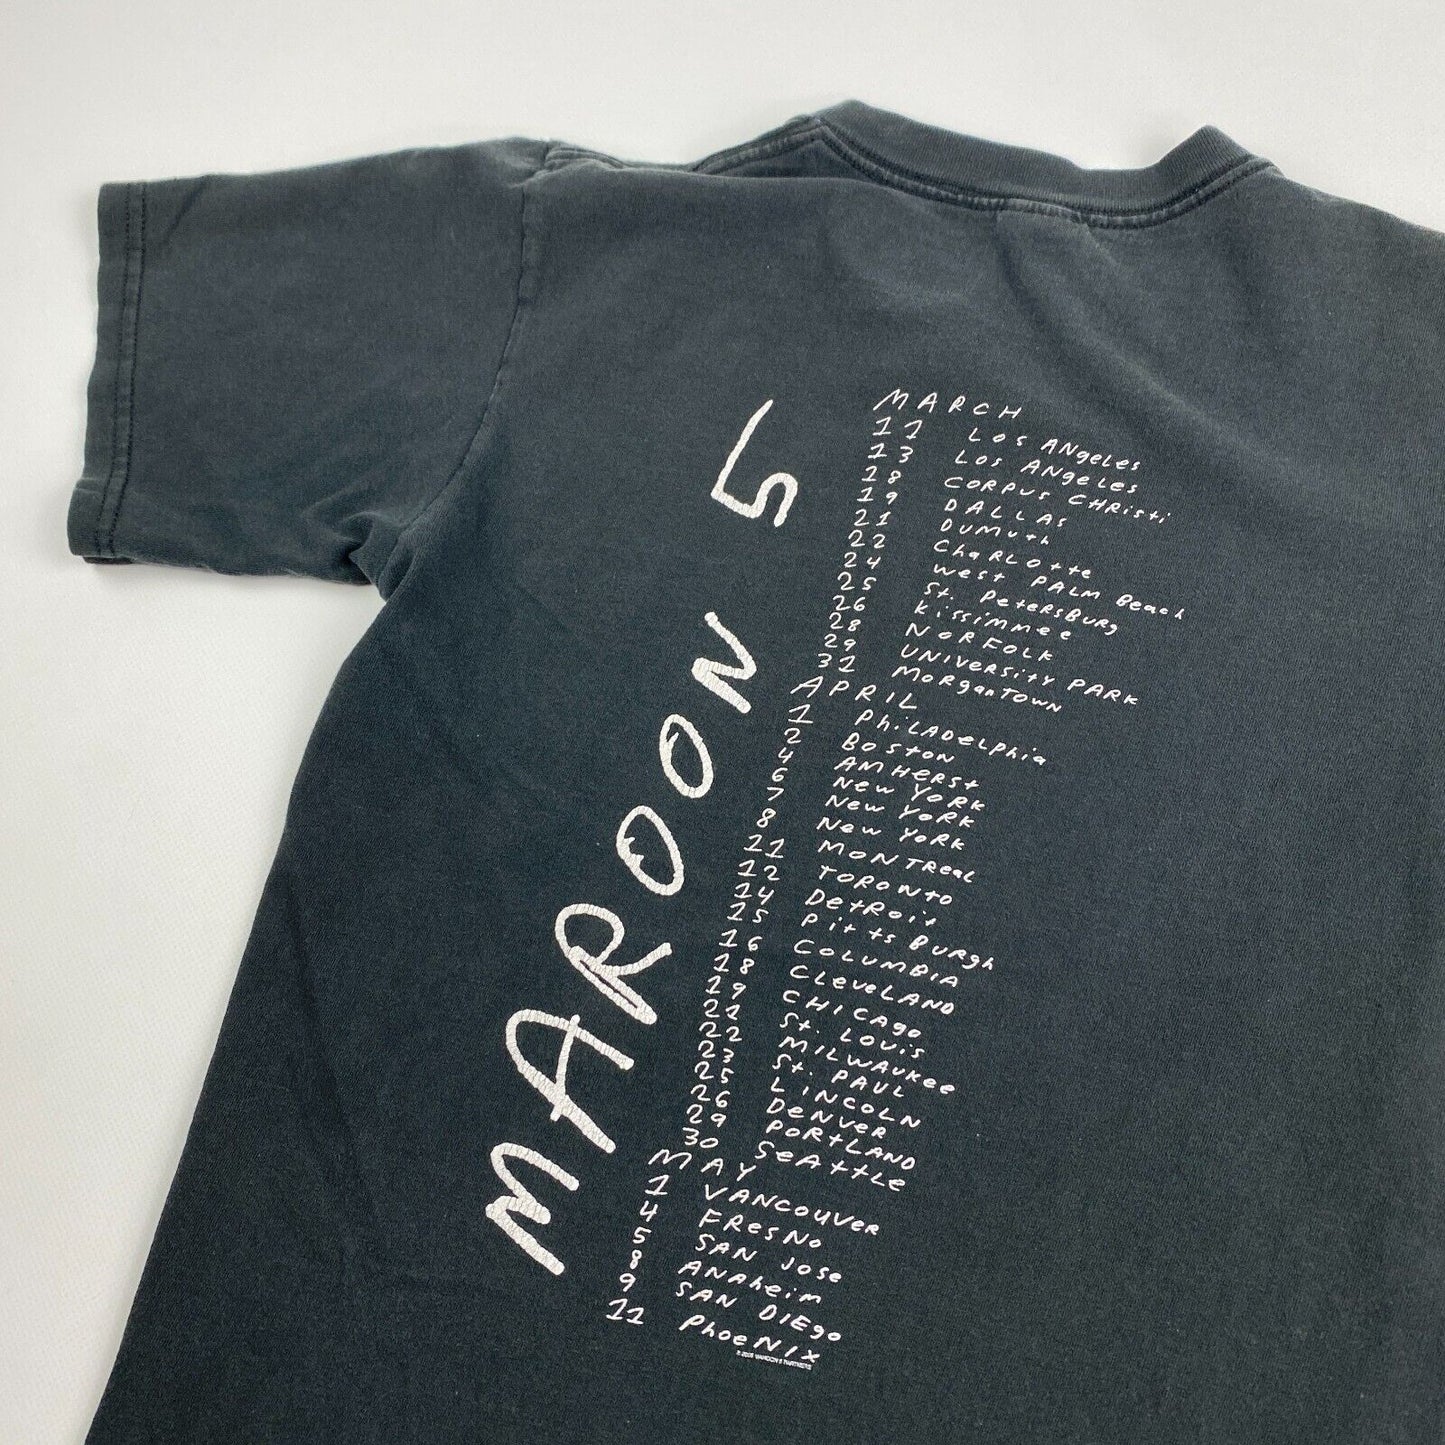 VINTAGE Maroon 5 Band Tour Black T-Shirt sz Small Men